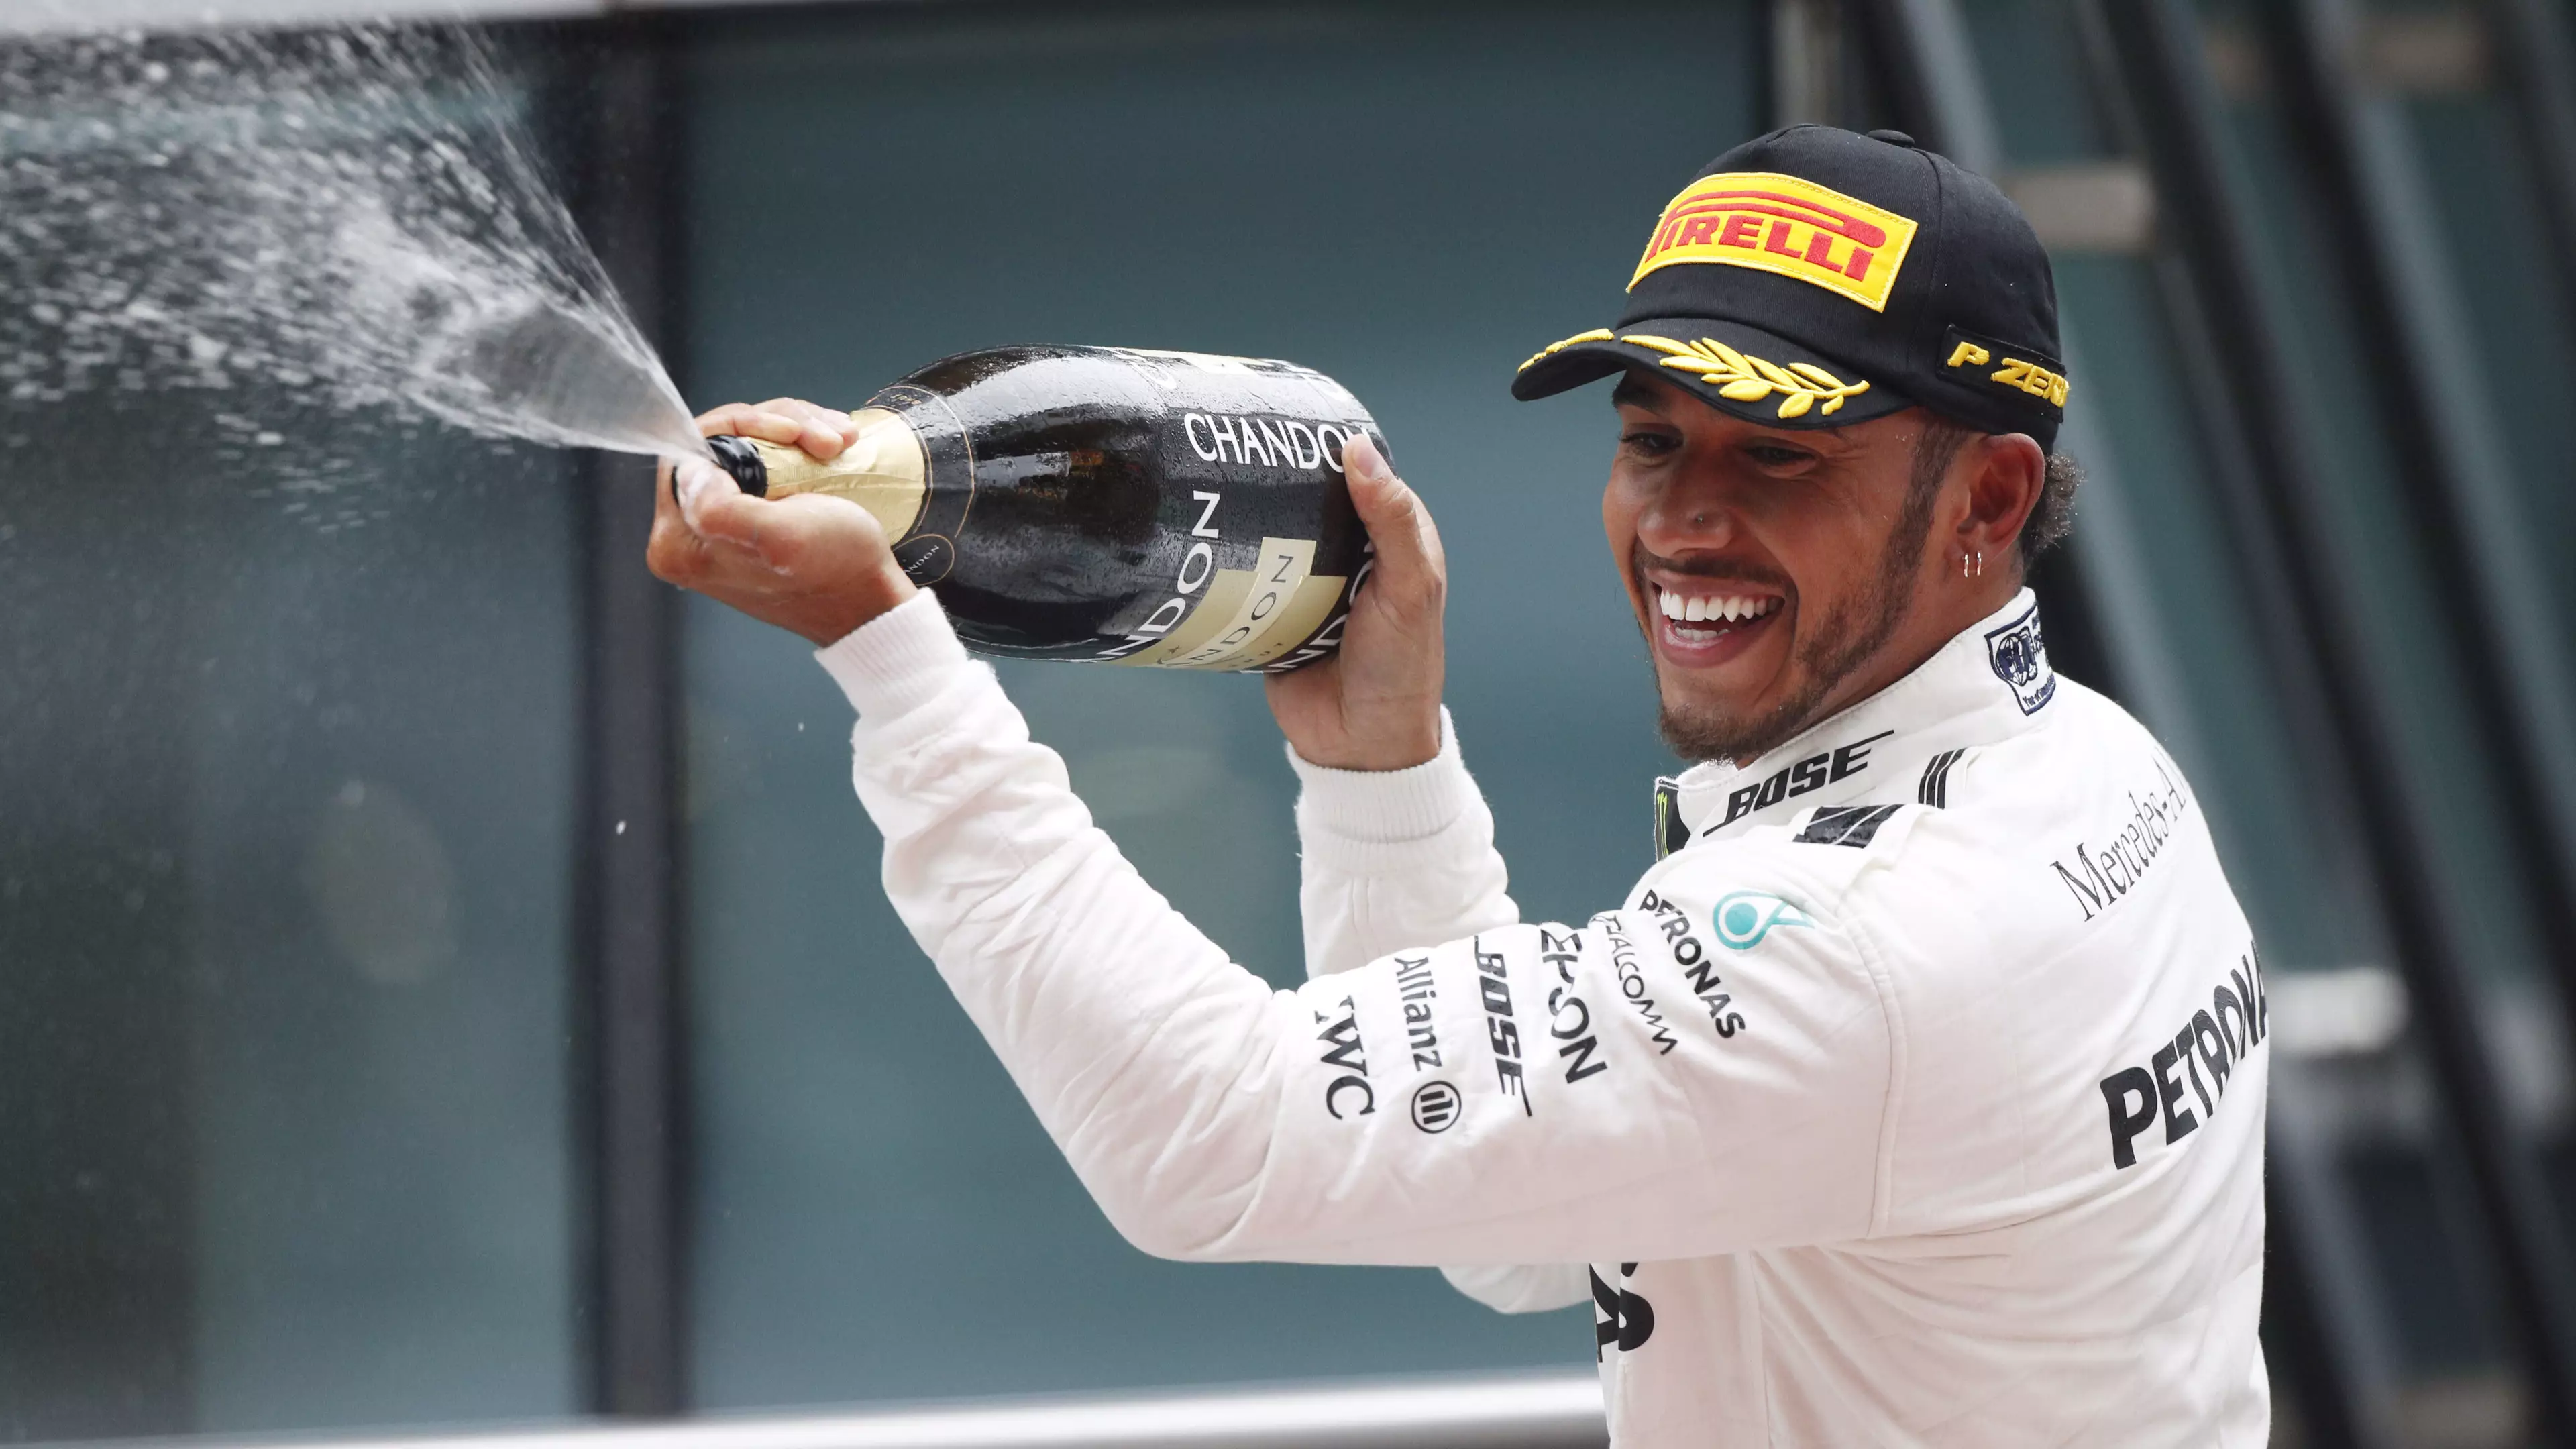 Lewis Hamilton Retains Title As Britain's Richest Sports Star